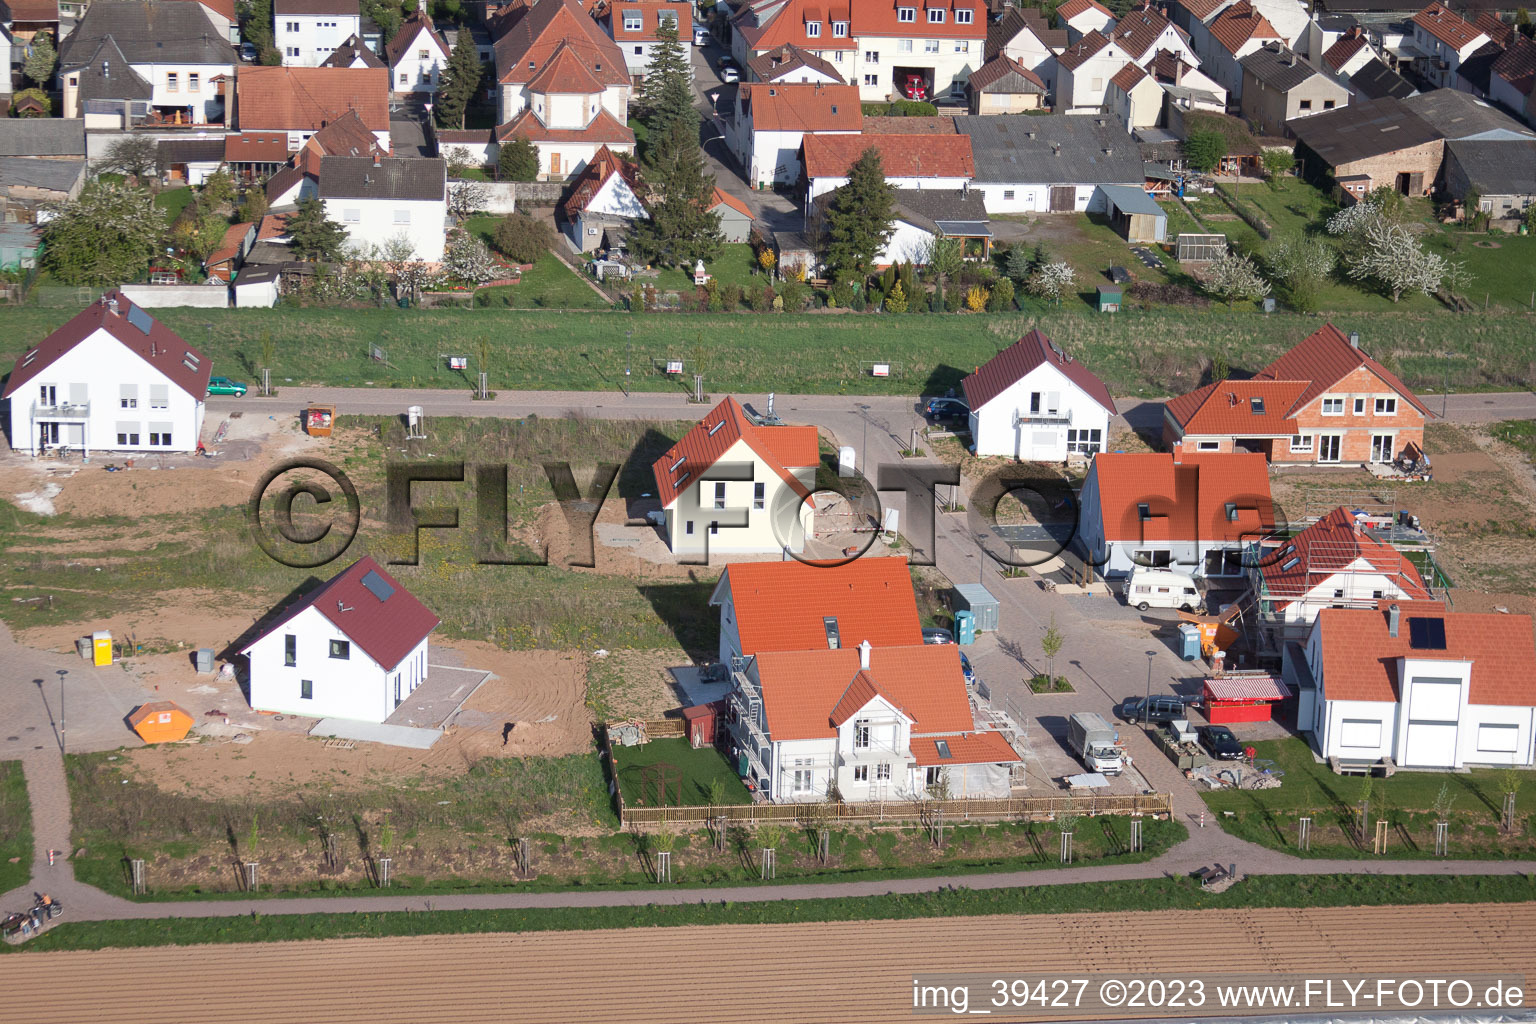 District Mörlheim in Landau in der Pfalz in the state Rhineland-Palatinate, Germany viewn from the air